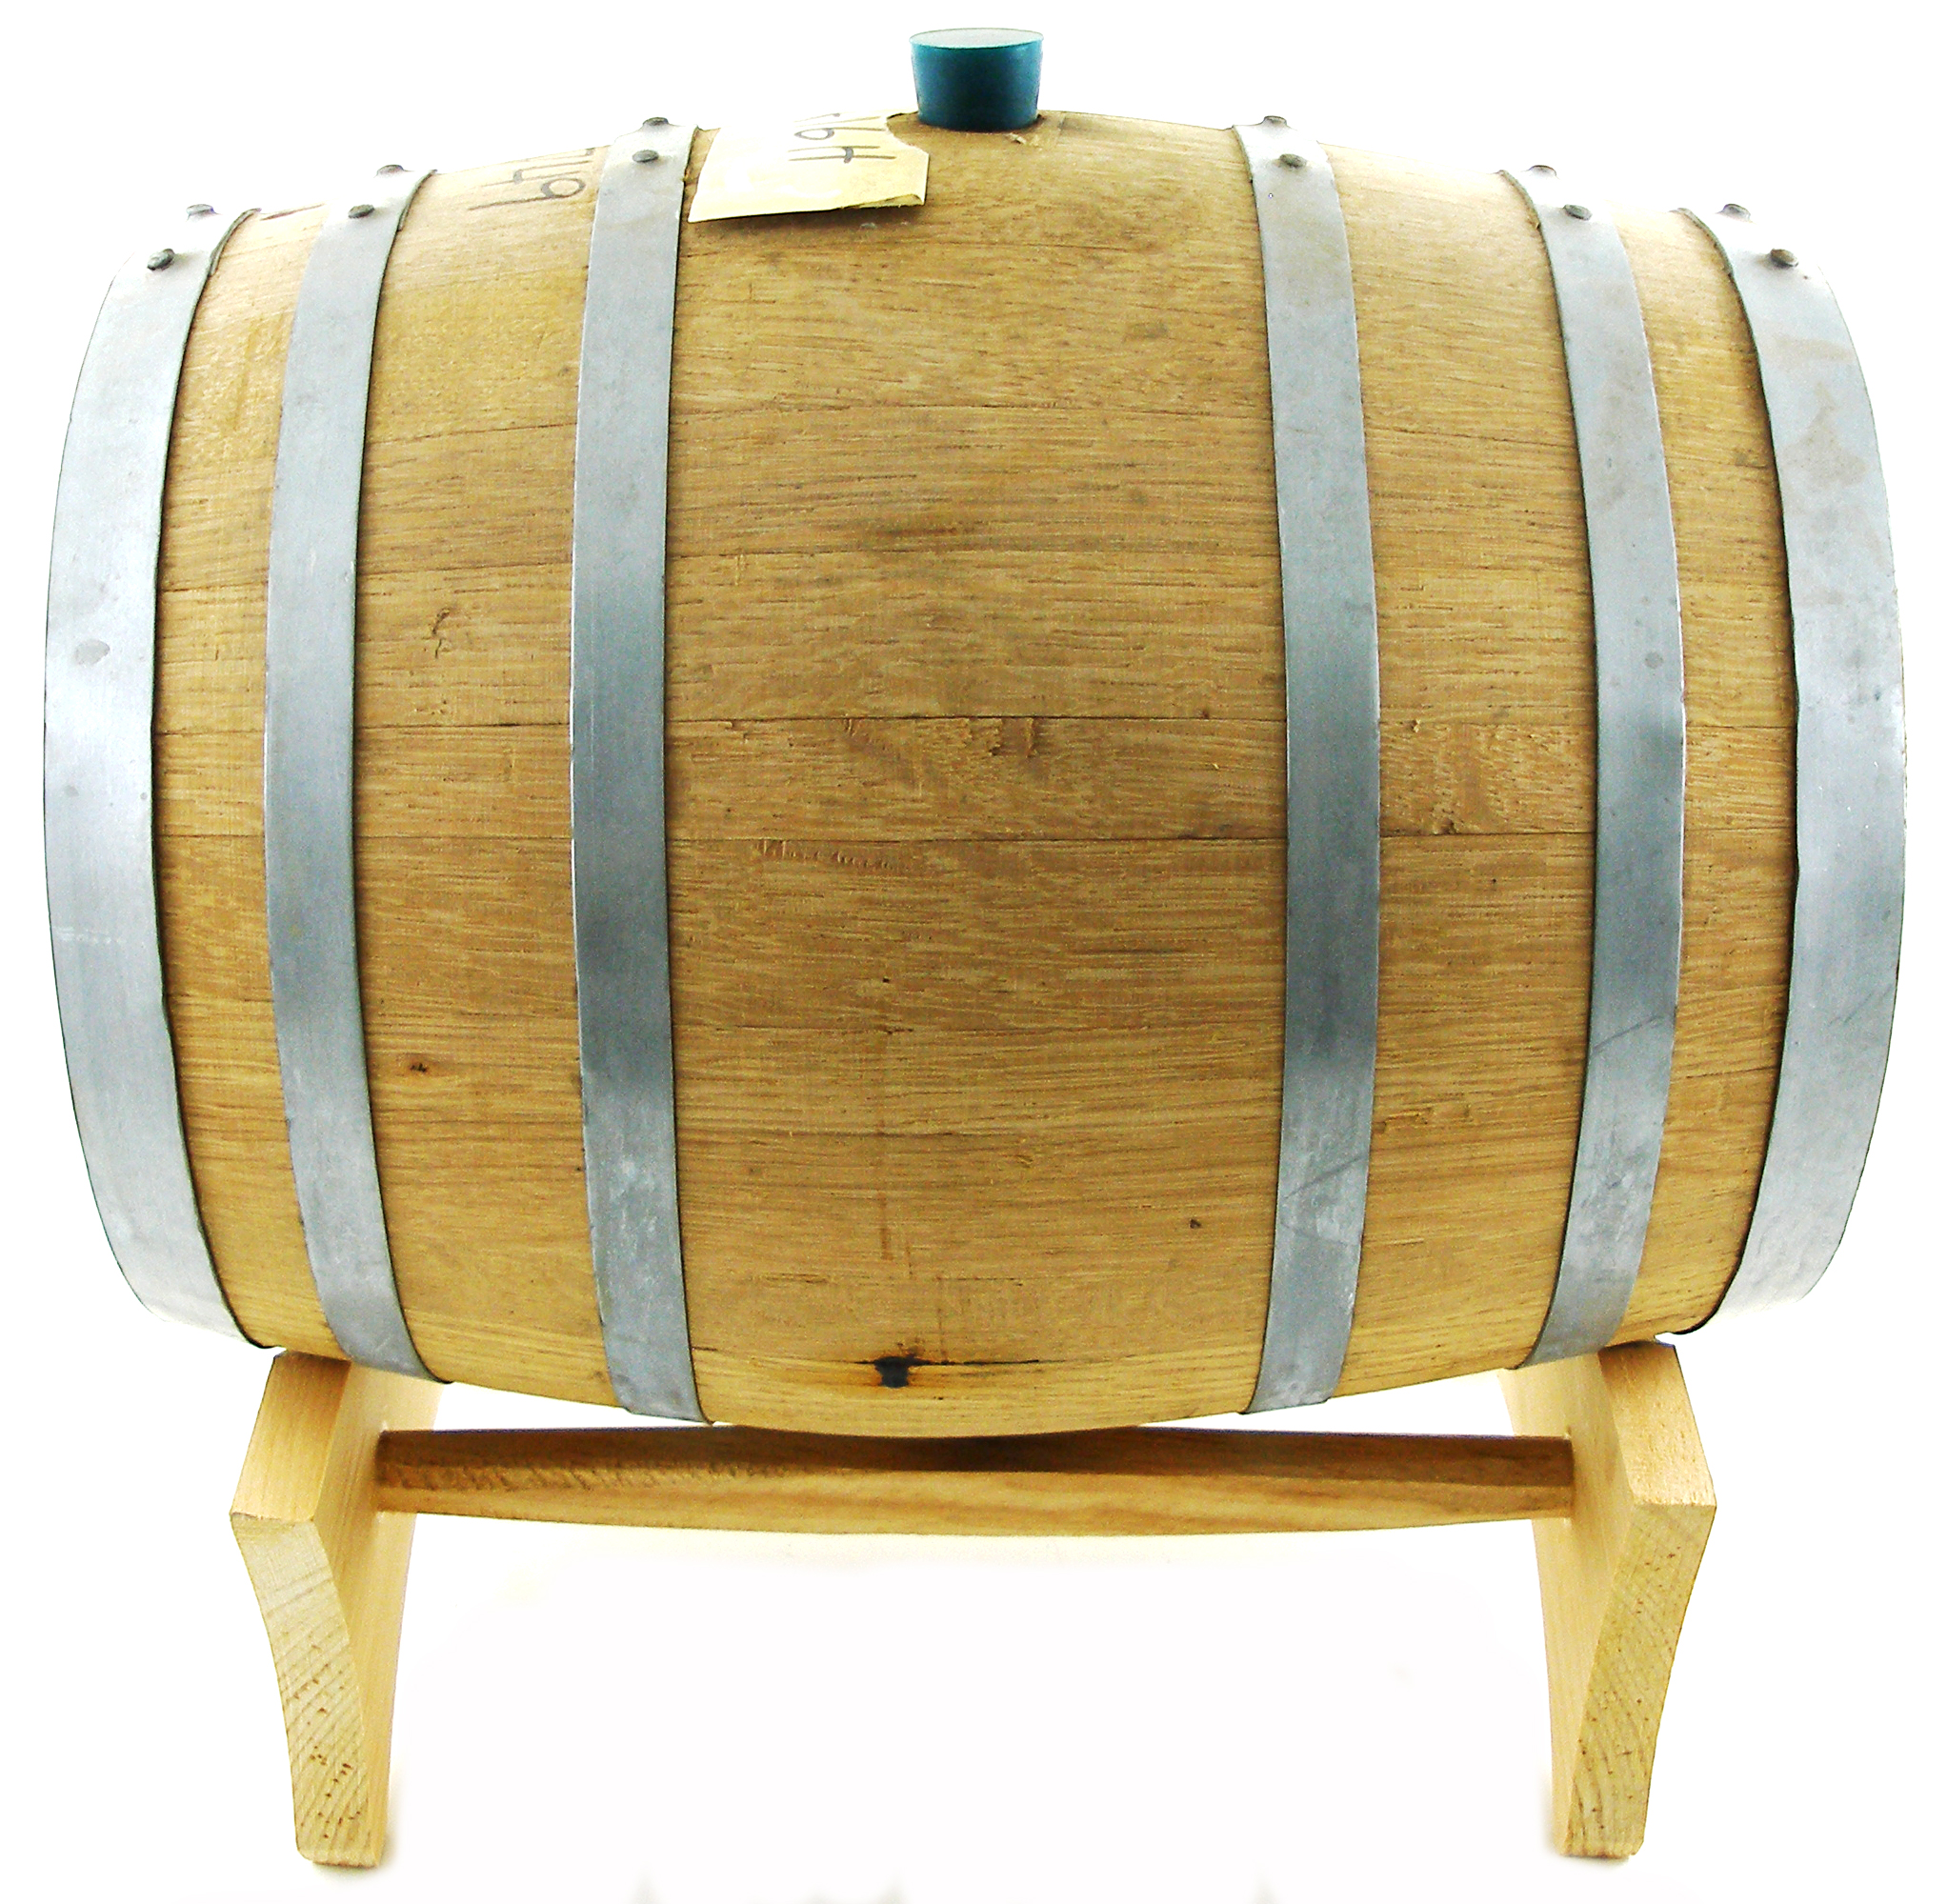 American Oak Barrel - 5 Gallon